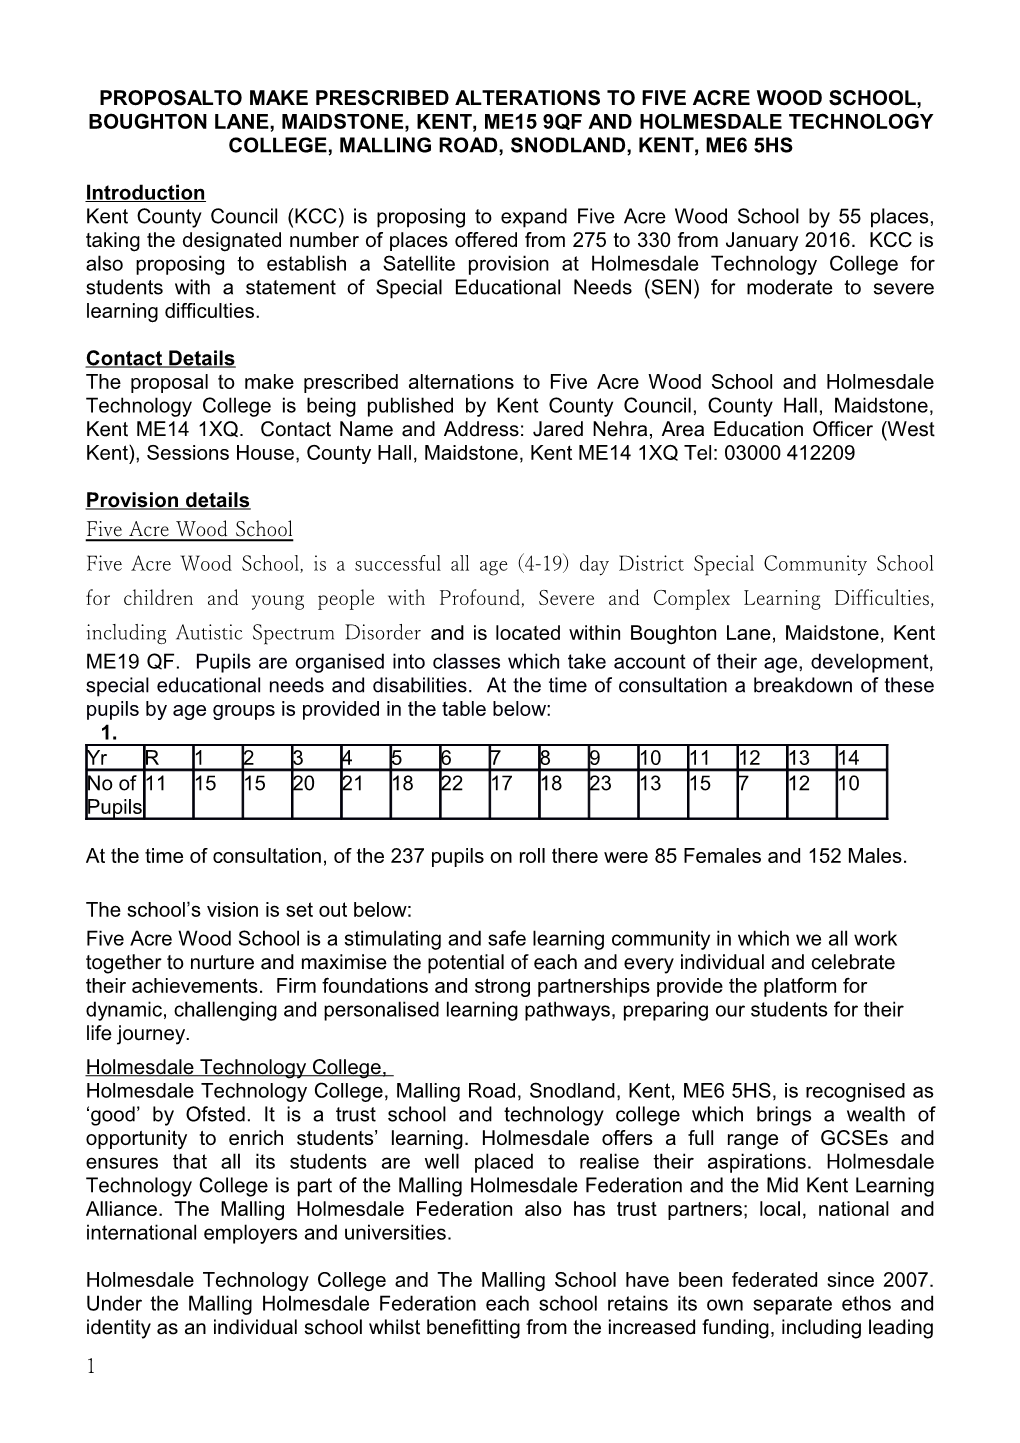 Proposalto Make Prescribed Alterations to Five Acre Wood School,Boughton Lane, Maidstone